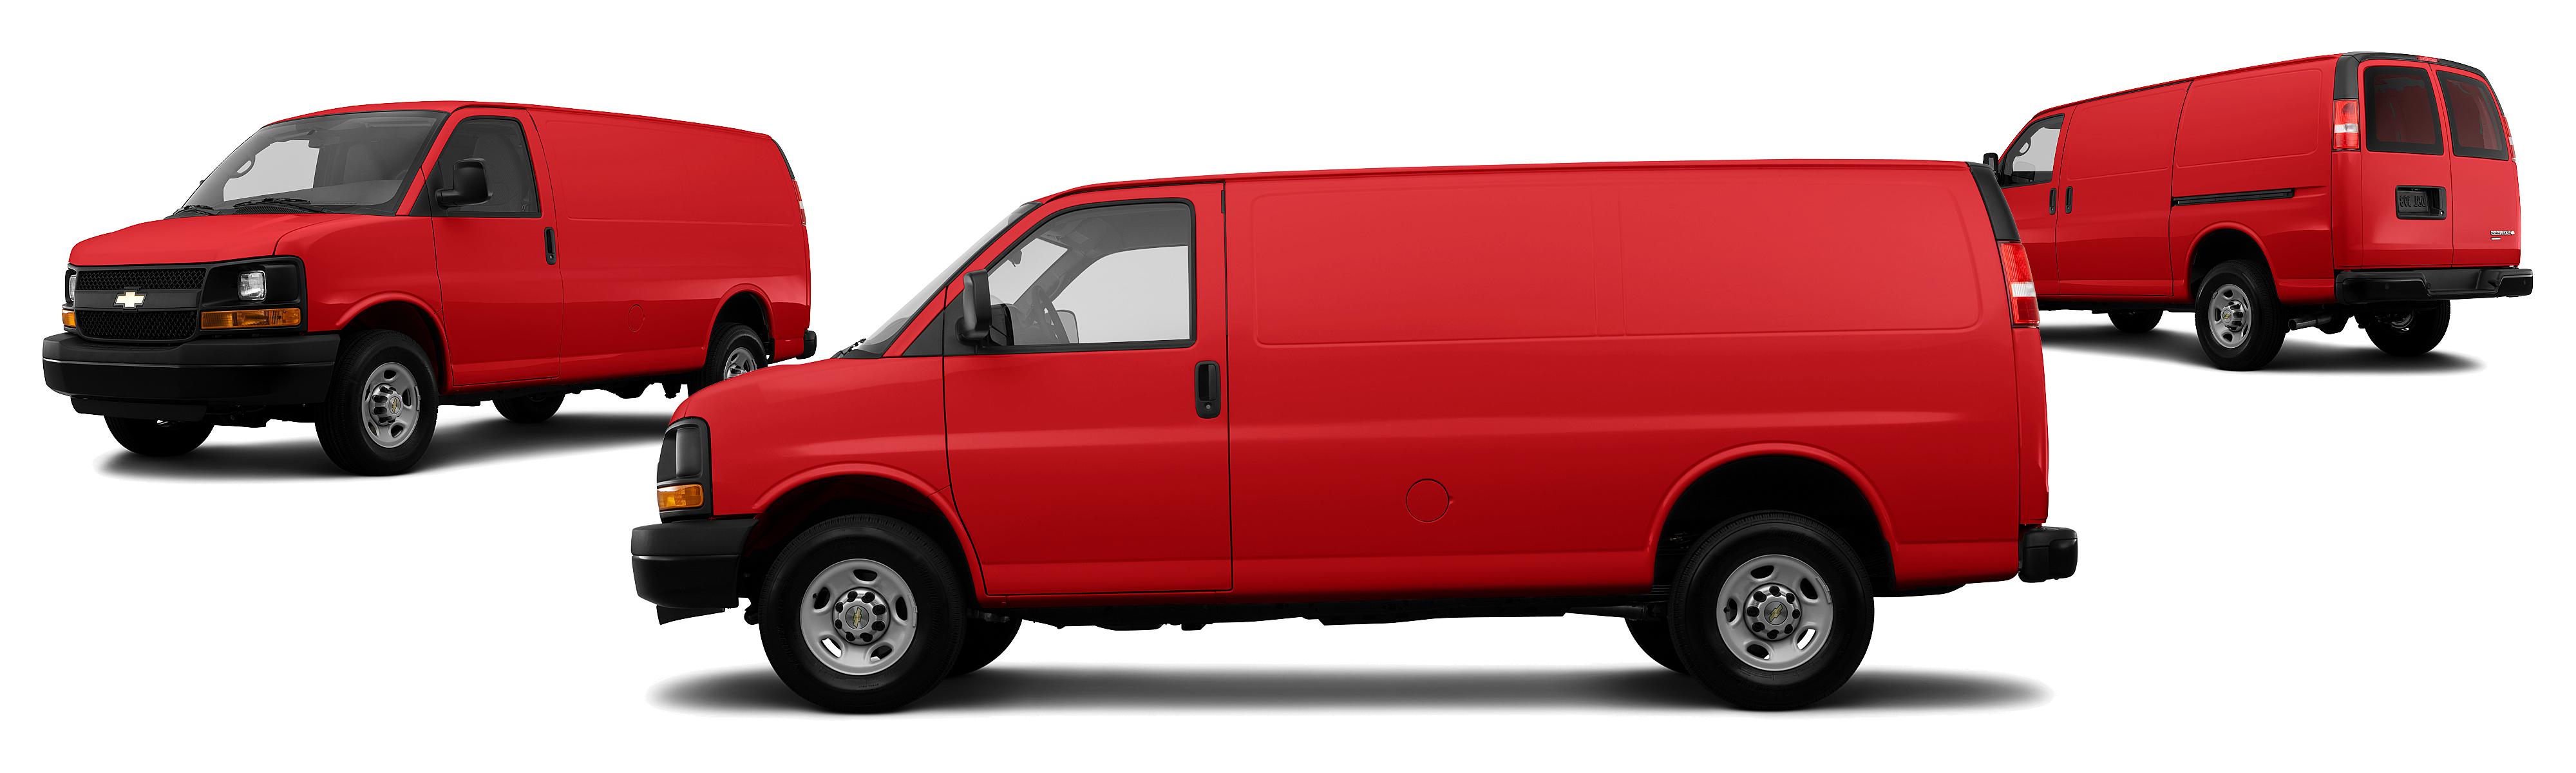 2014 Chevrolet Express Cargo 3500 3dr Cargo Van w/Paratransit - Research -  GrooveCar